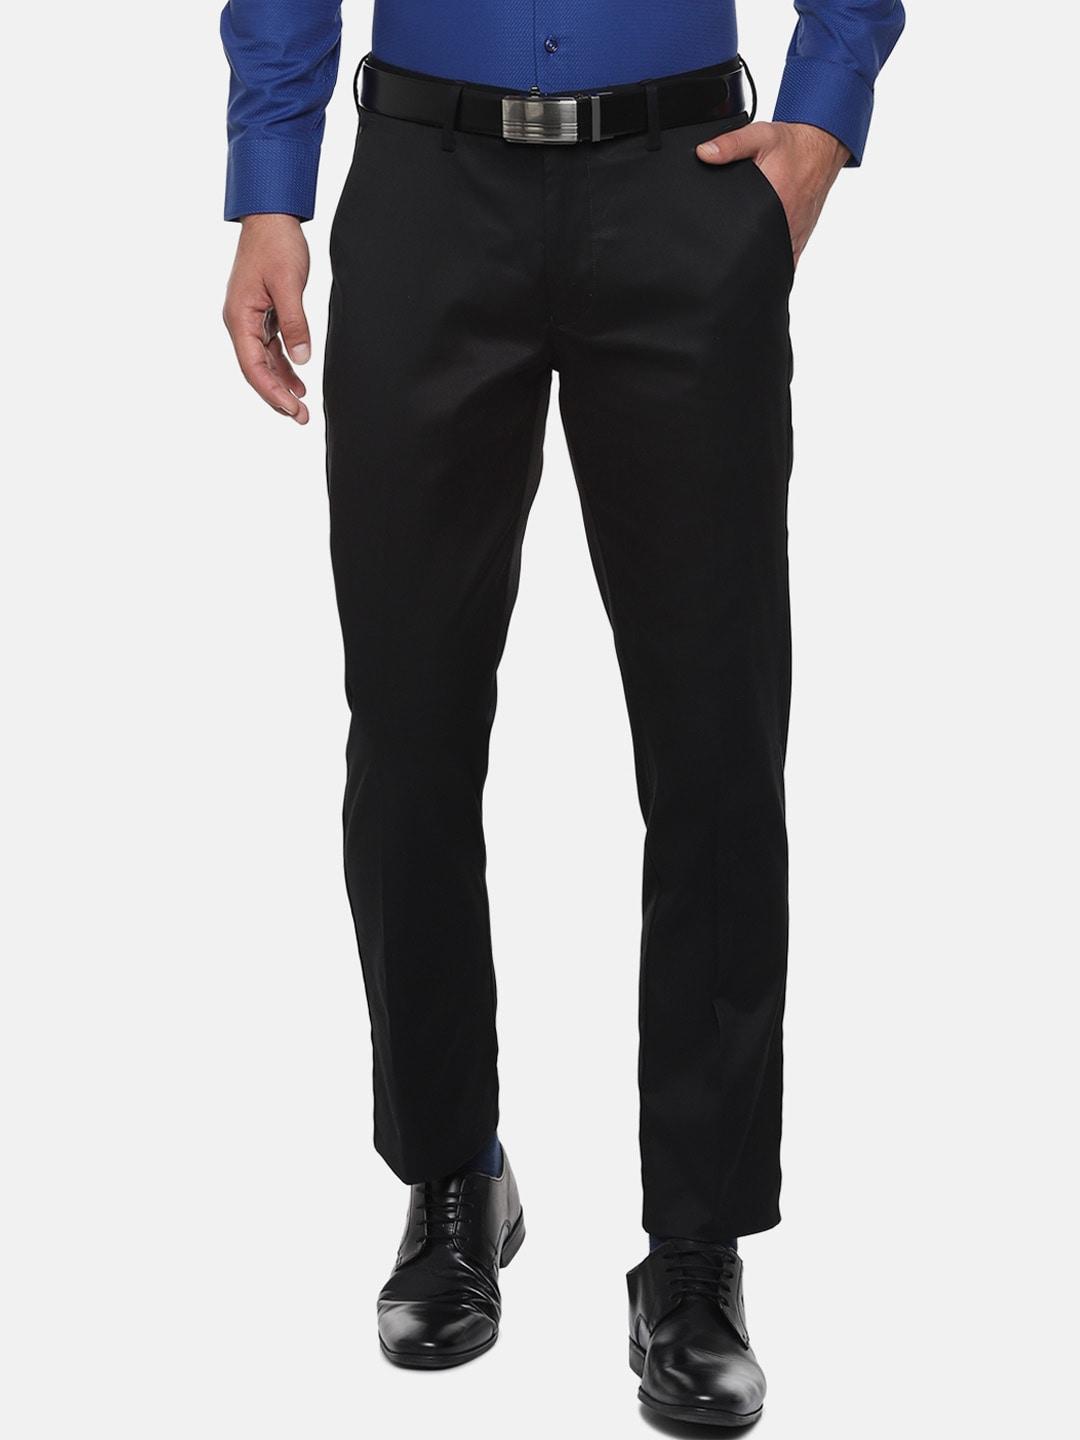 louis-philippe-men-black-regular-fit-solid-formal-trousers